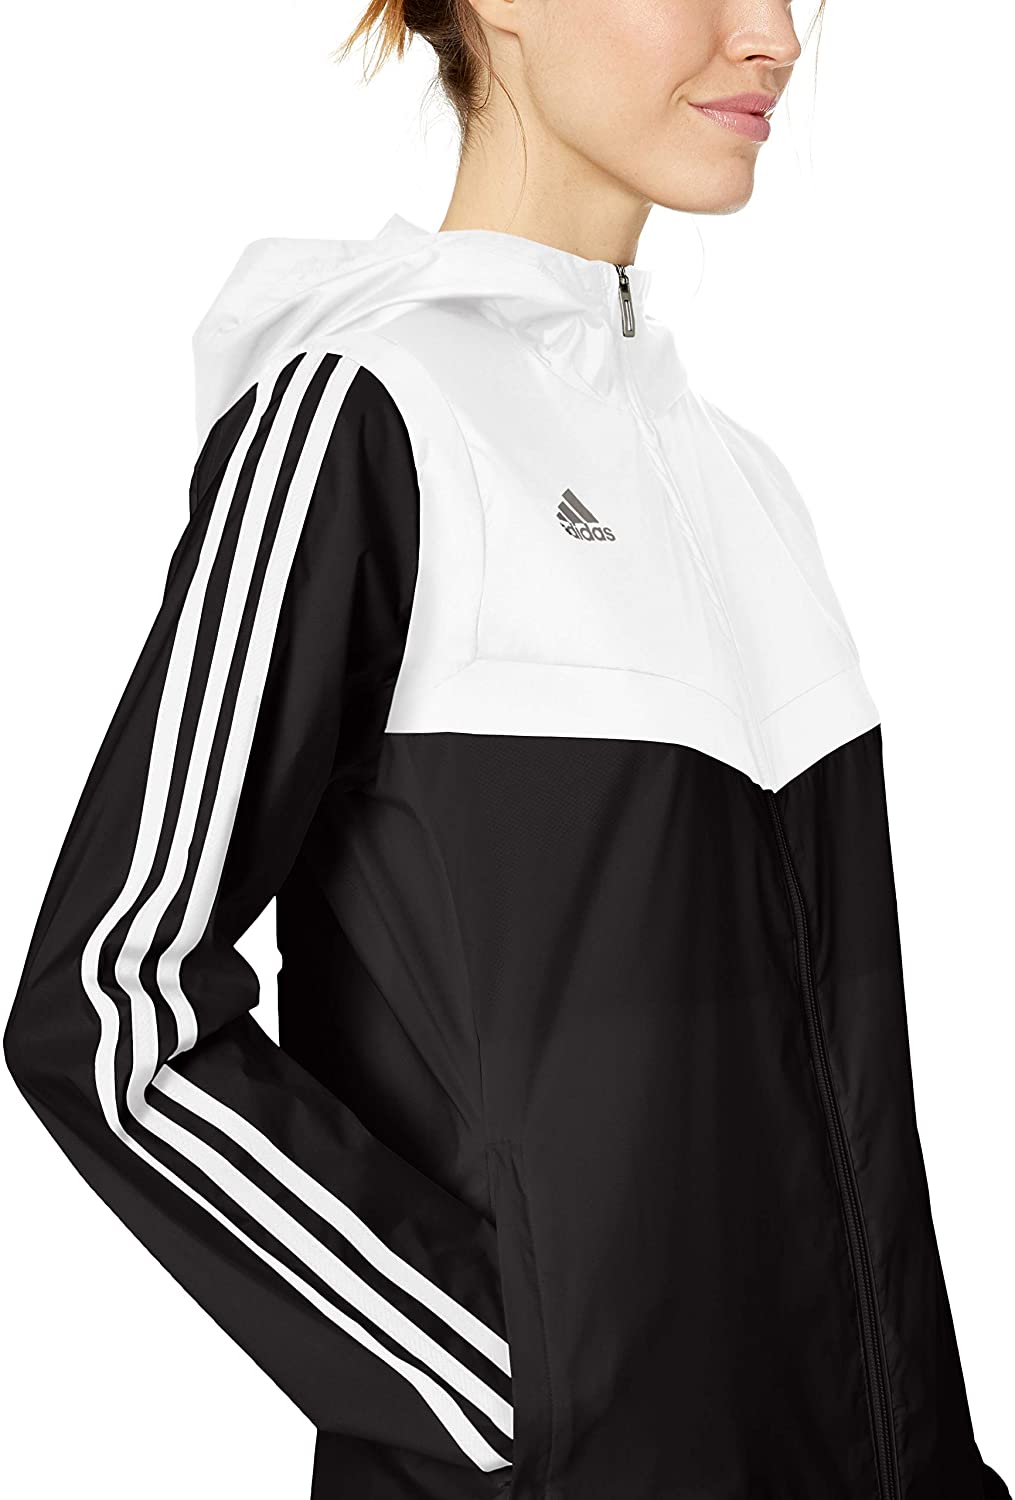 Adidas Womens Tiro Windbreaker Soccer Jacket